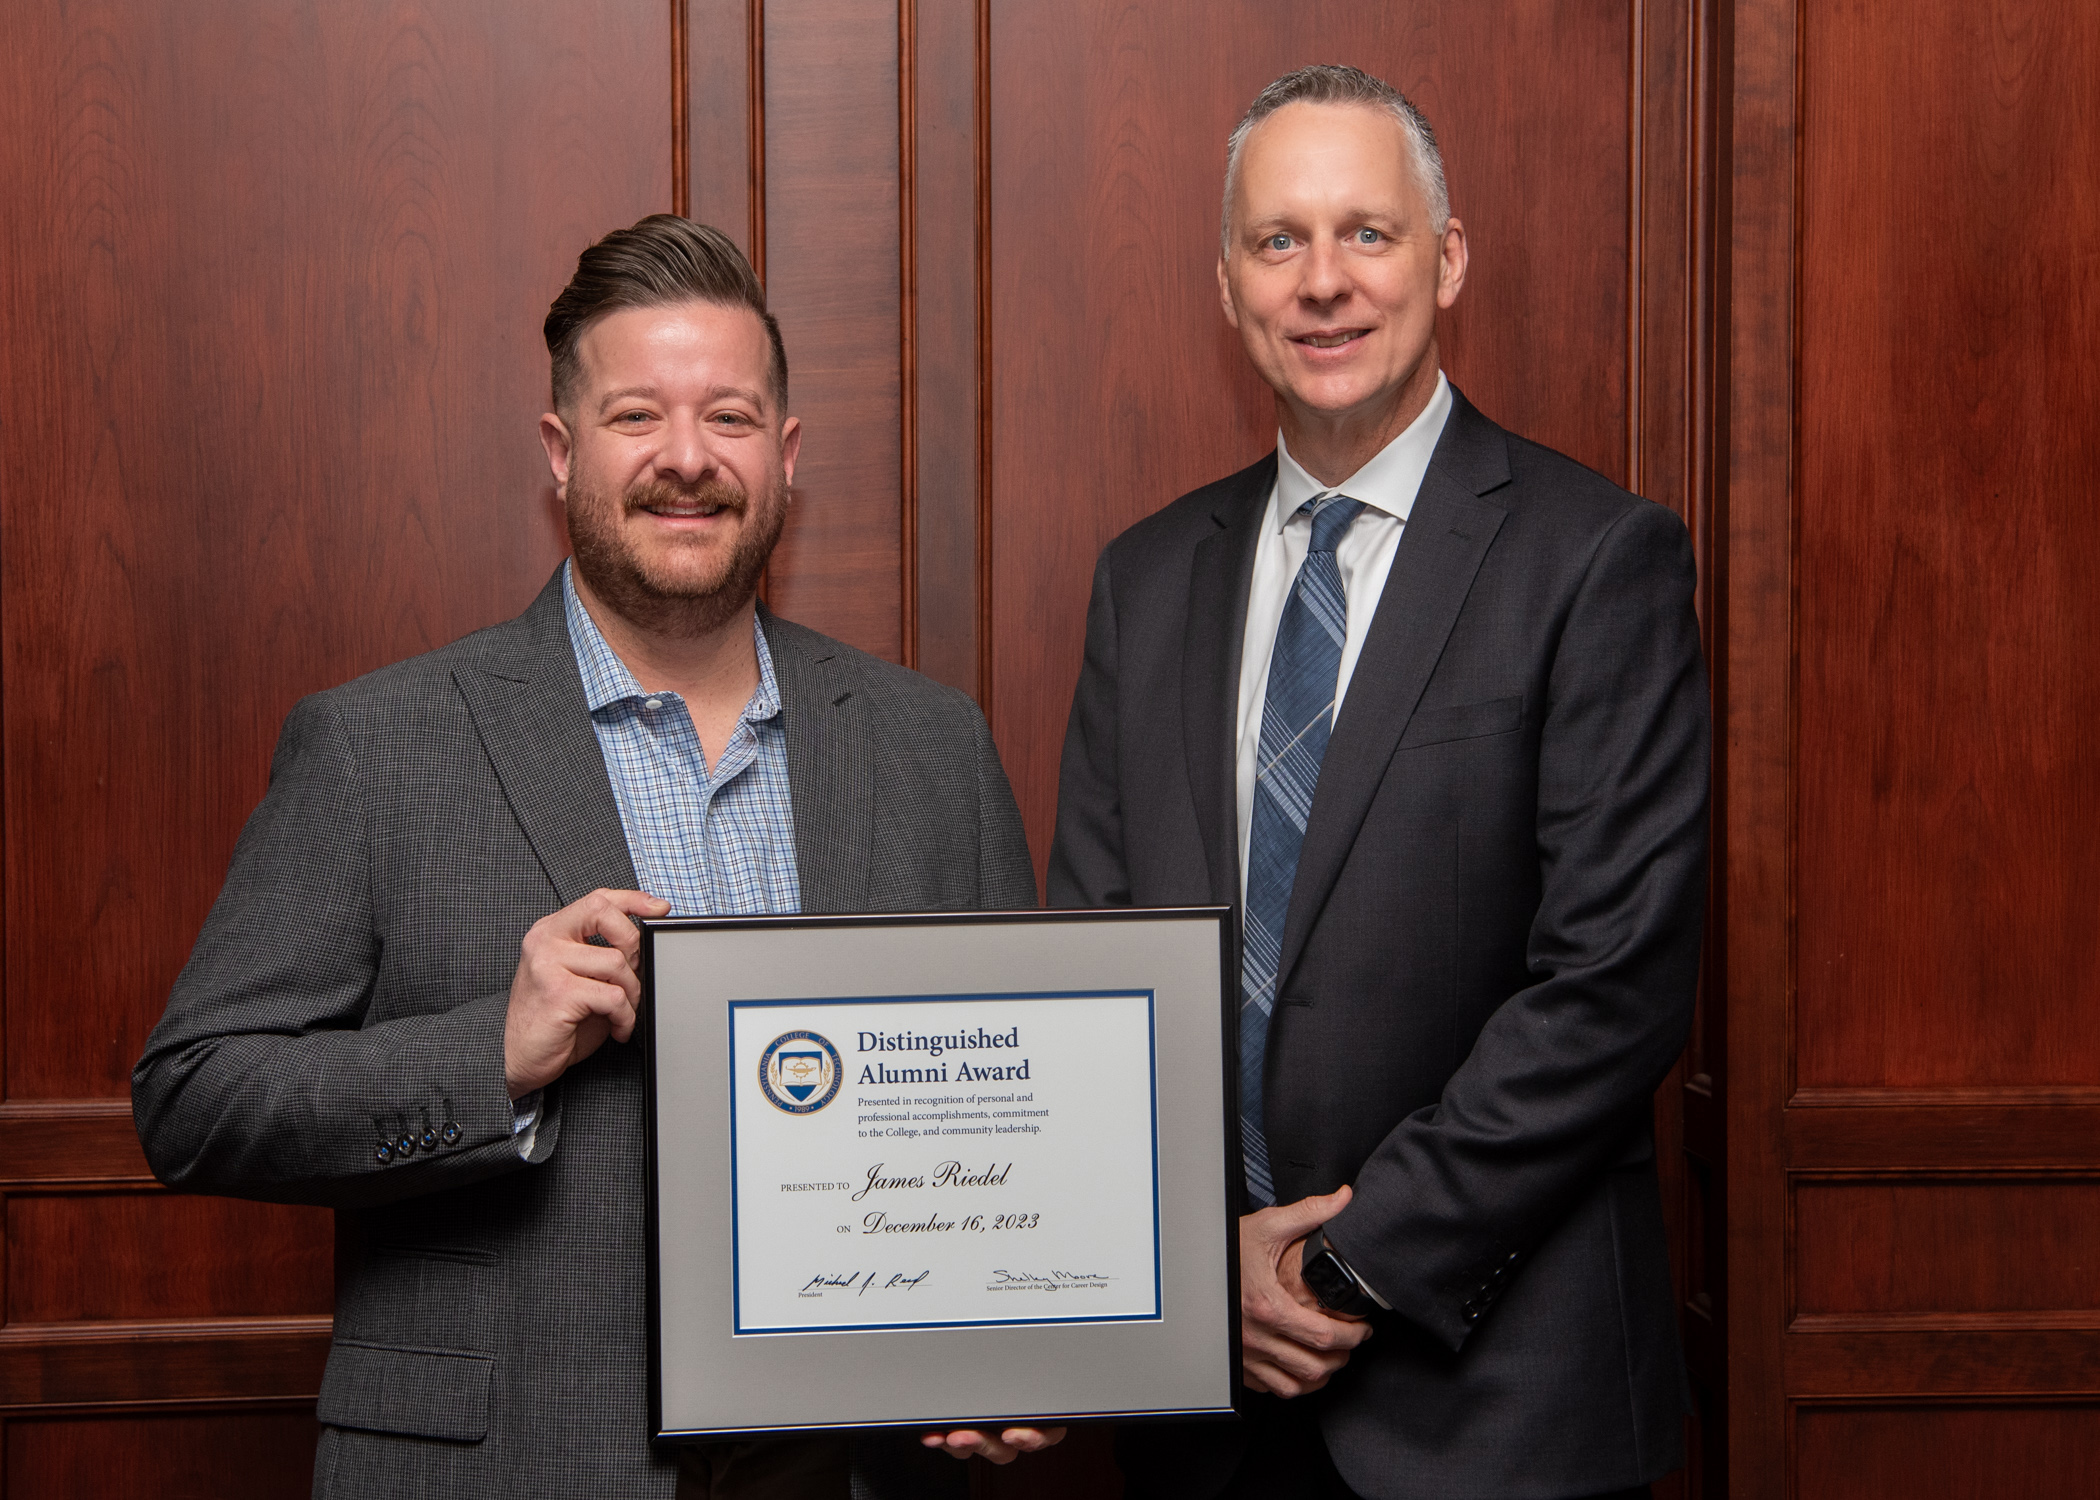 Automotive graduate receives Distinguished Alumni Award